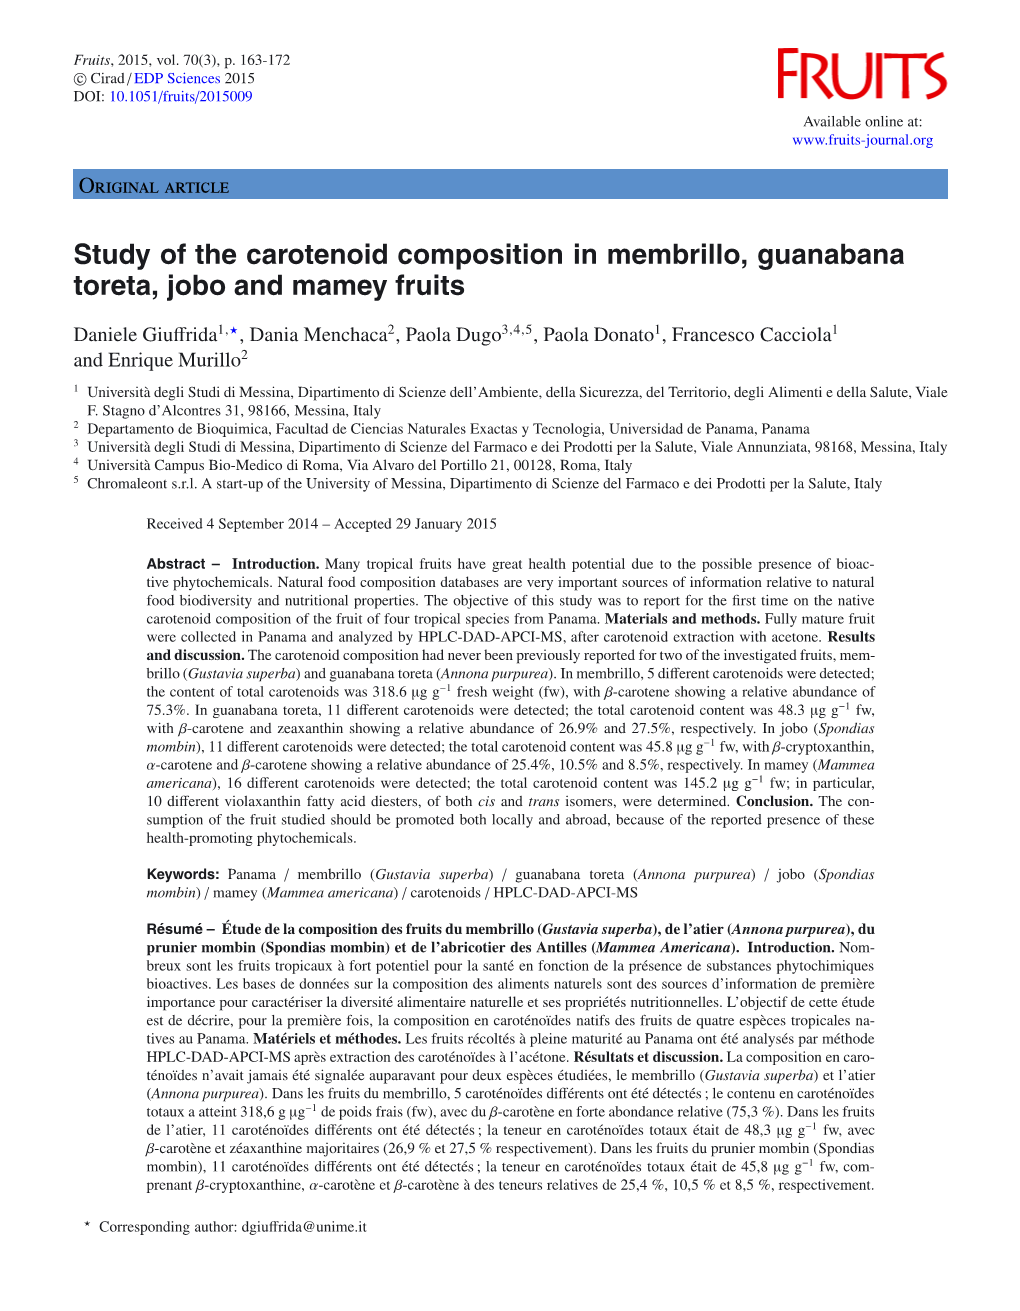 Study of the Carotenoid Composition in Membrillo, Guanabana Toreta, Jobo and Mamey Fruits